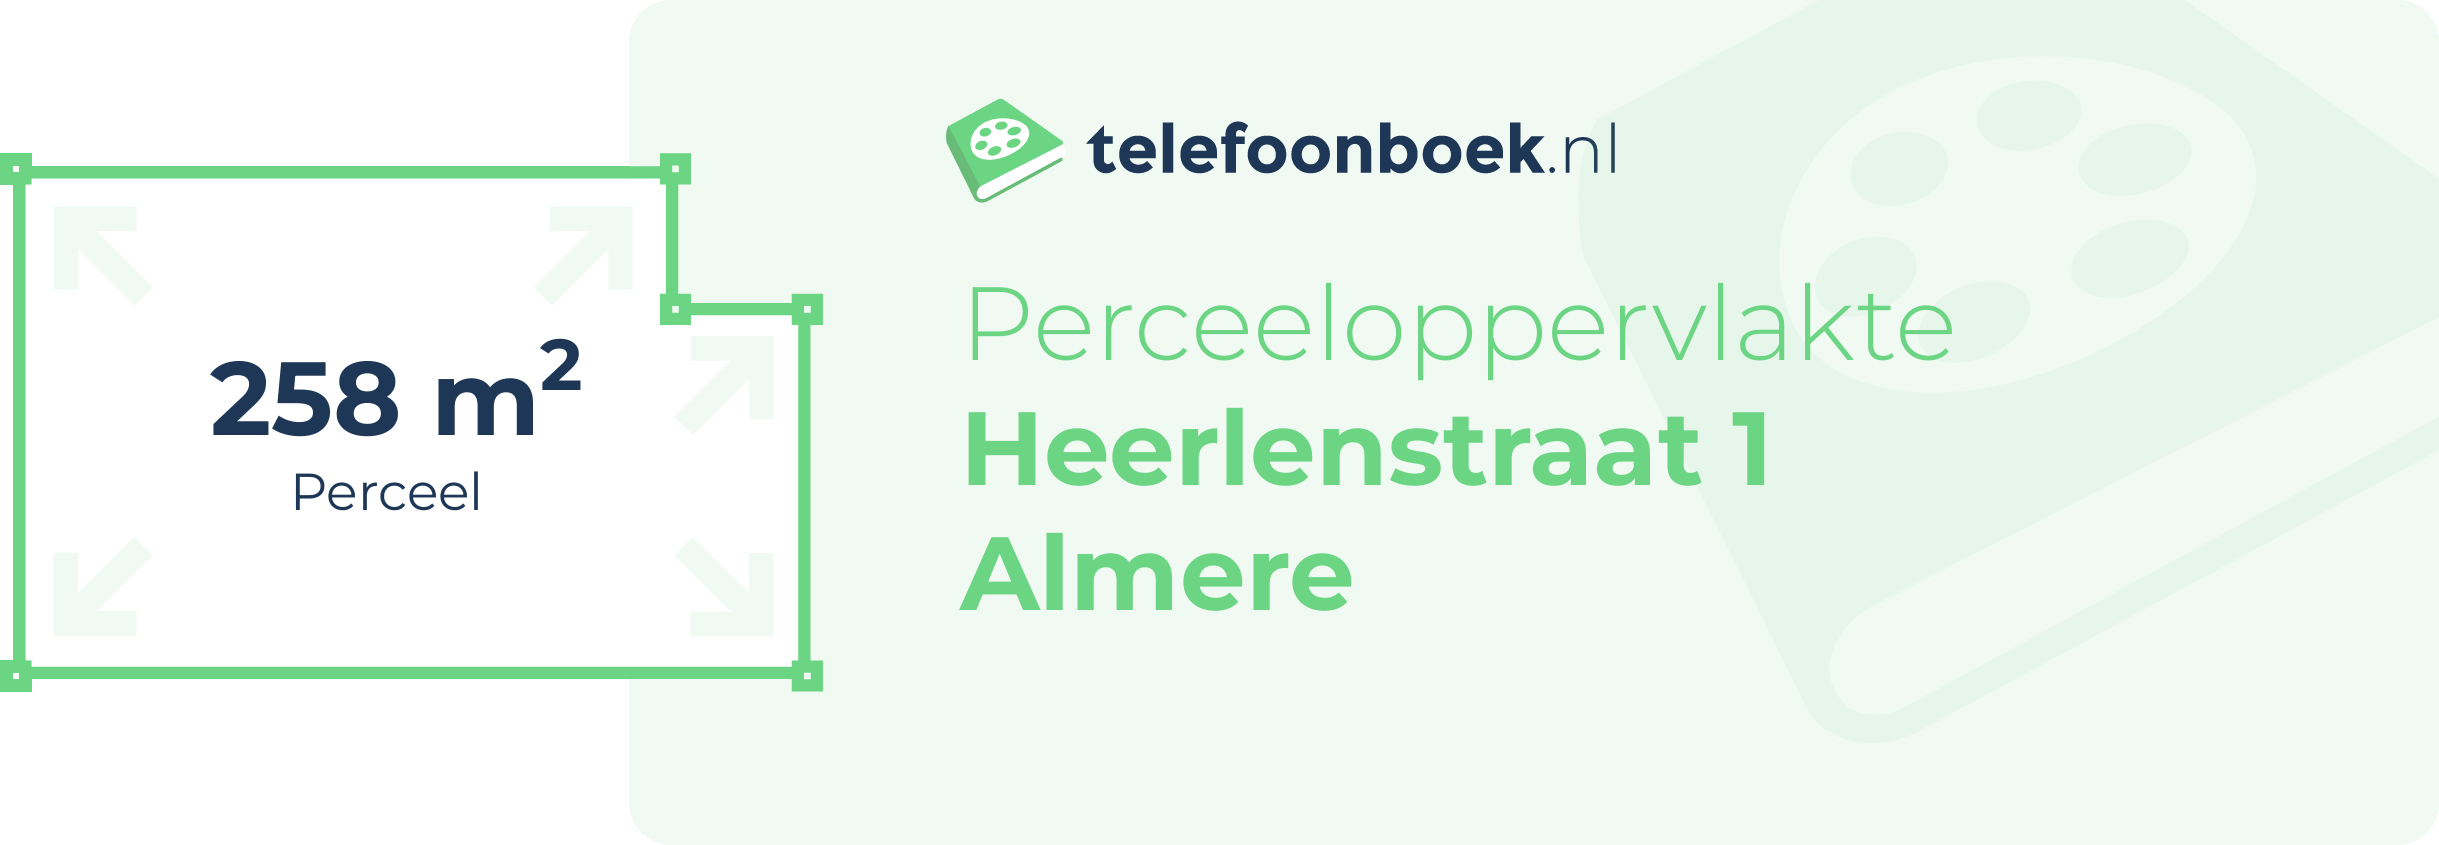 Perceeloppervlakte Heerlenstraat 1 Almere